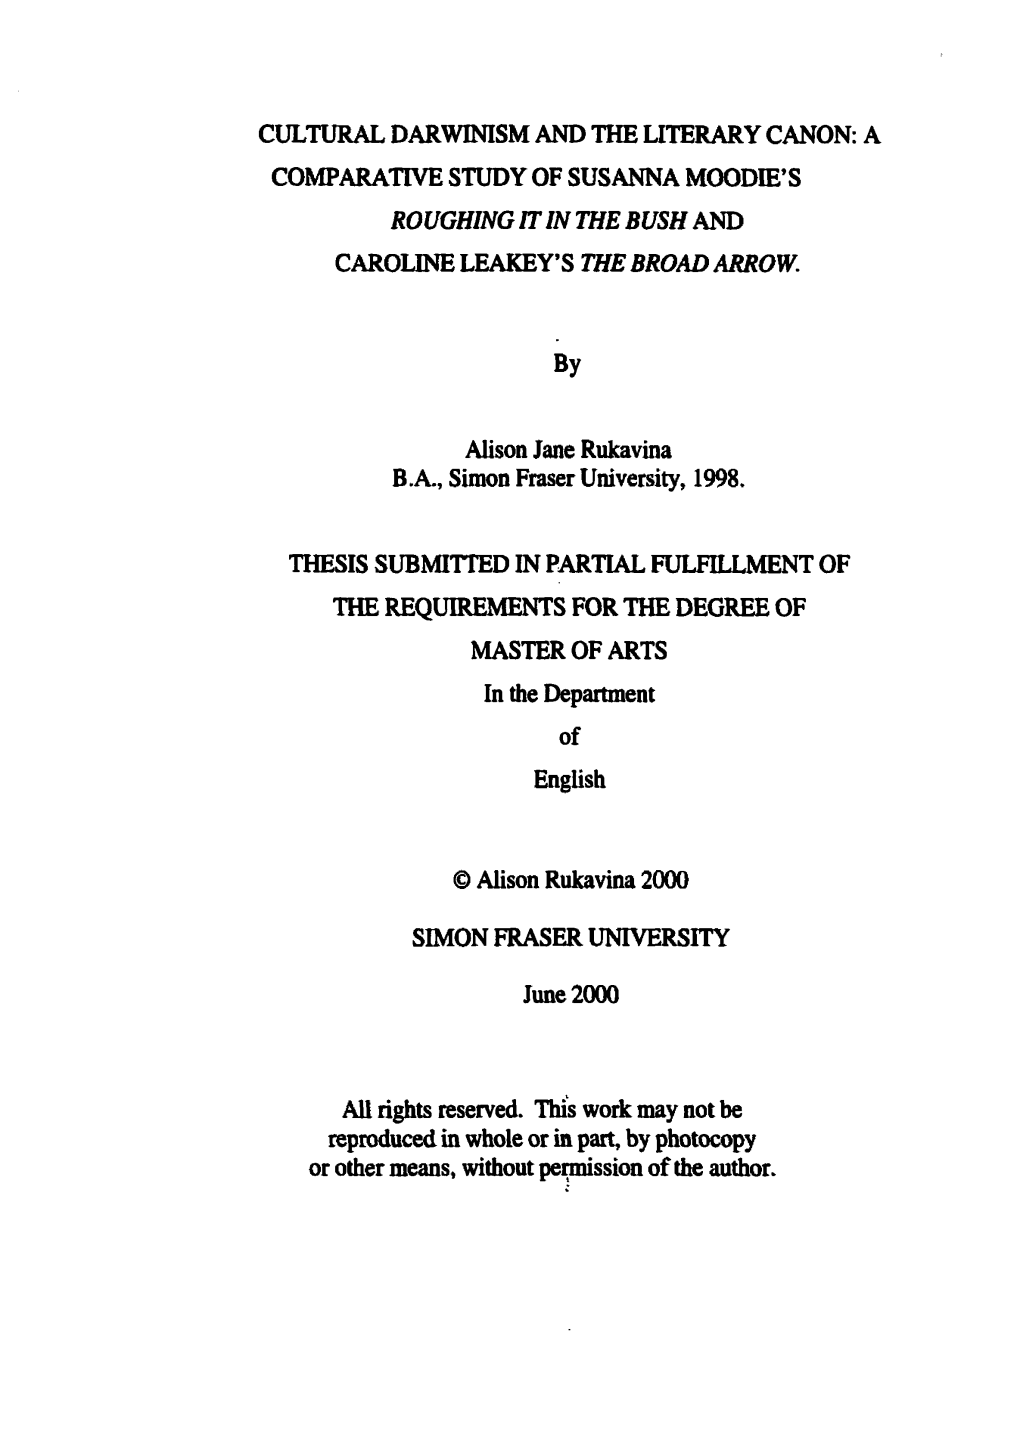 Caroliw Leakey's the Broad Arrow. Master of Arts